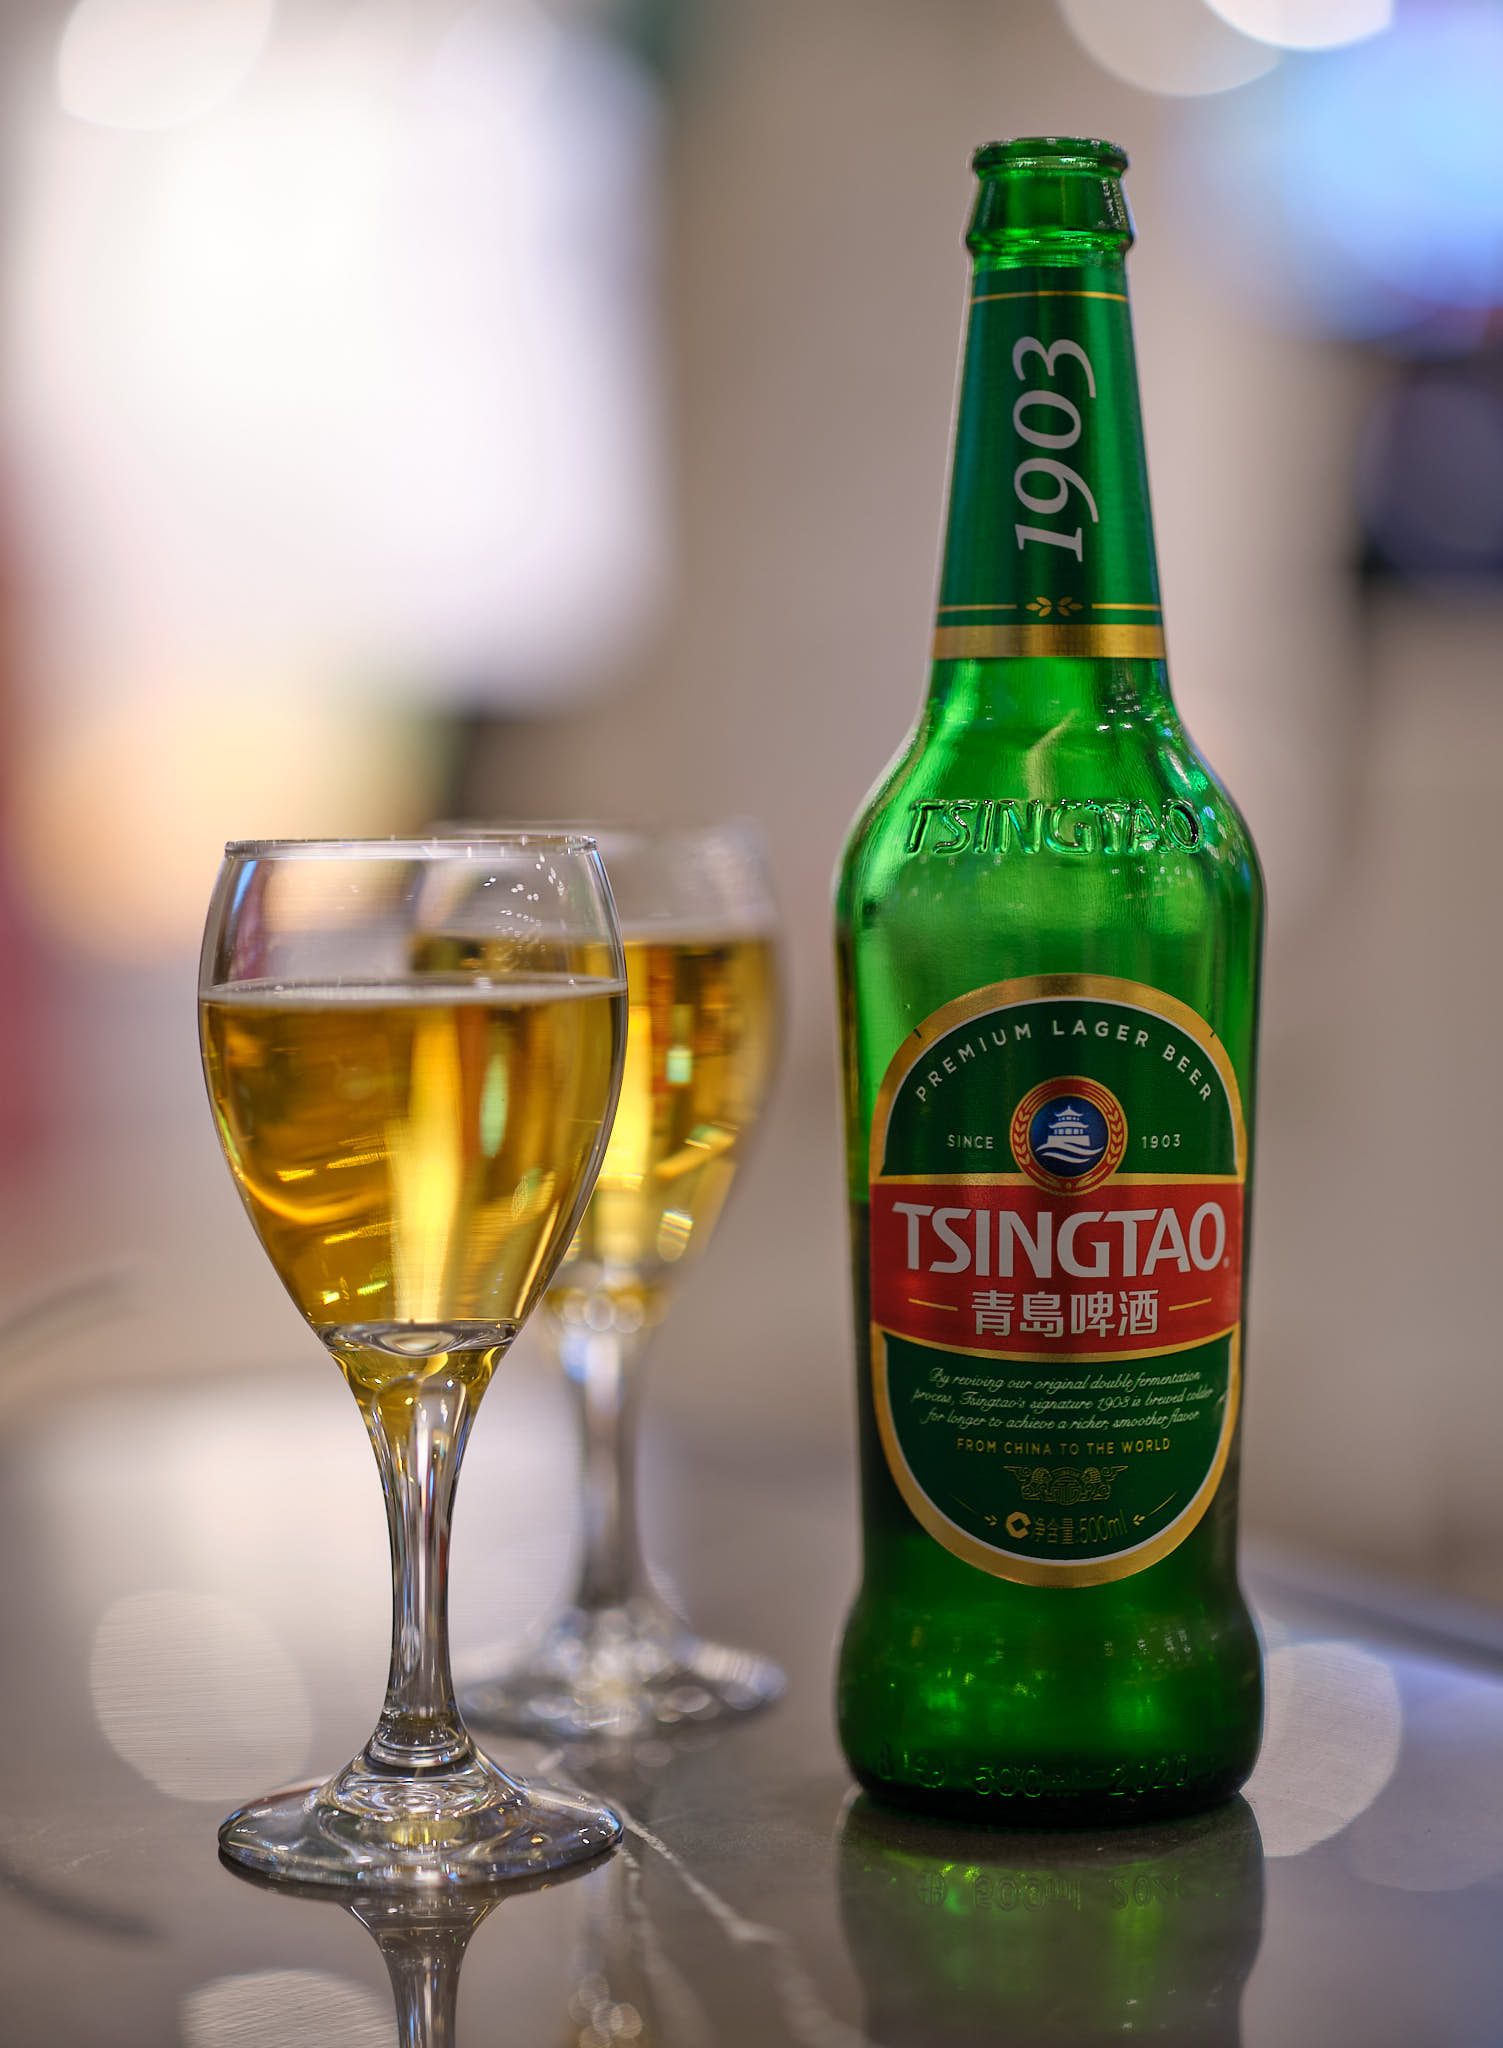 Tsingdao beer